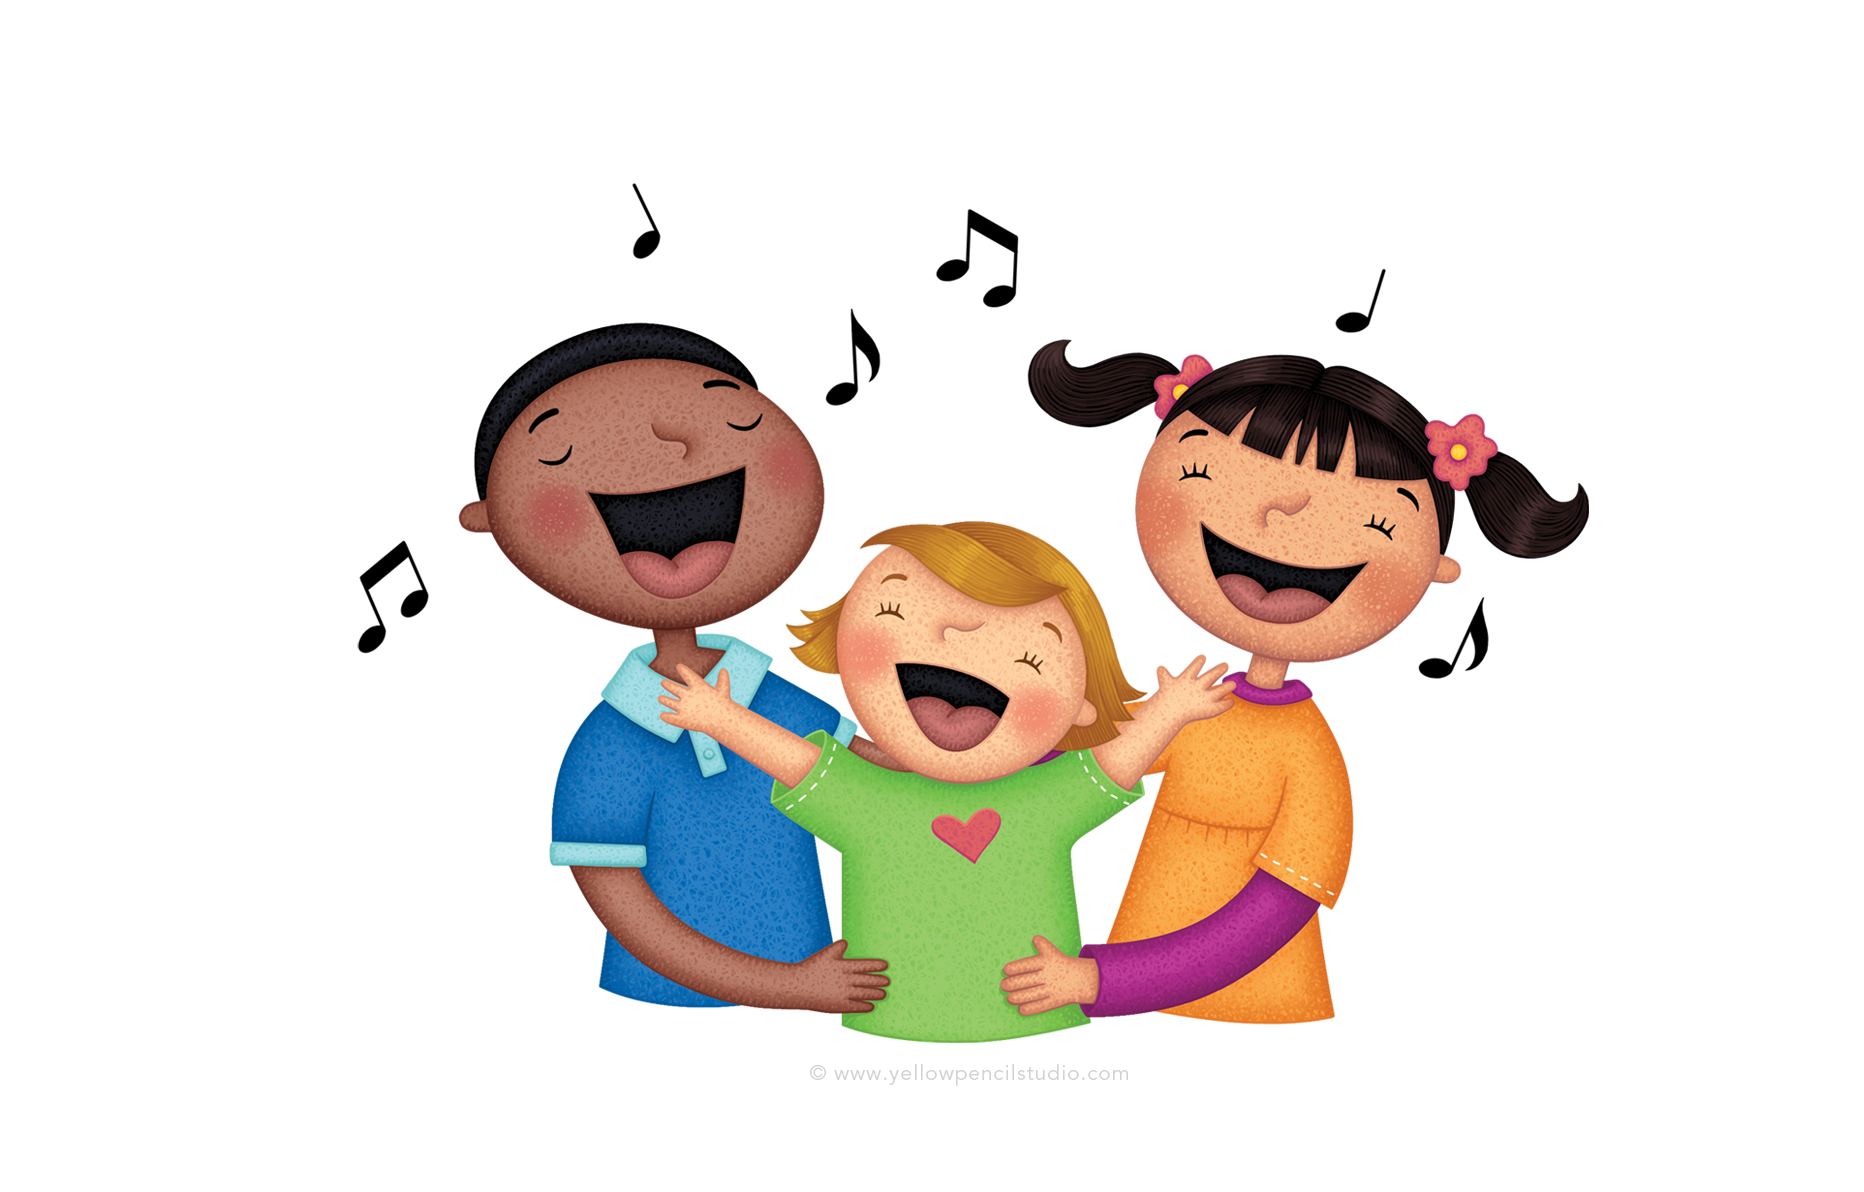 They like to sing. Singing мультяшный. Kids singing. Cartoon children singing.